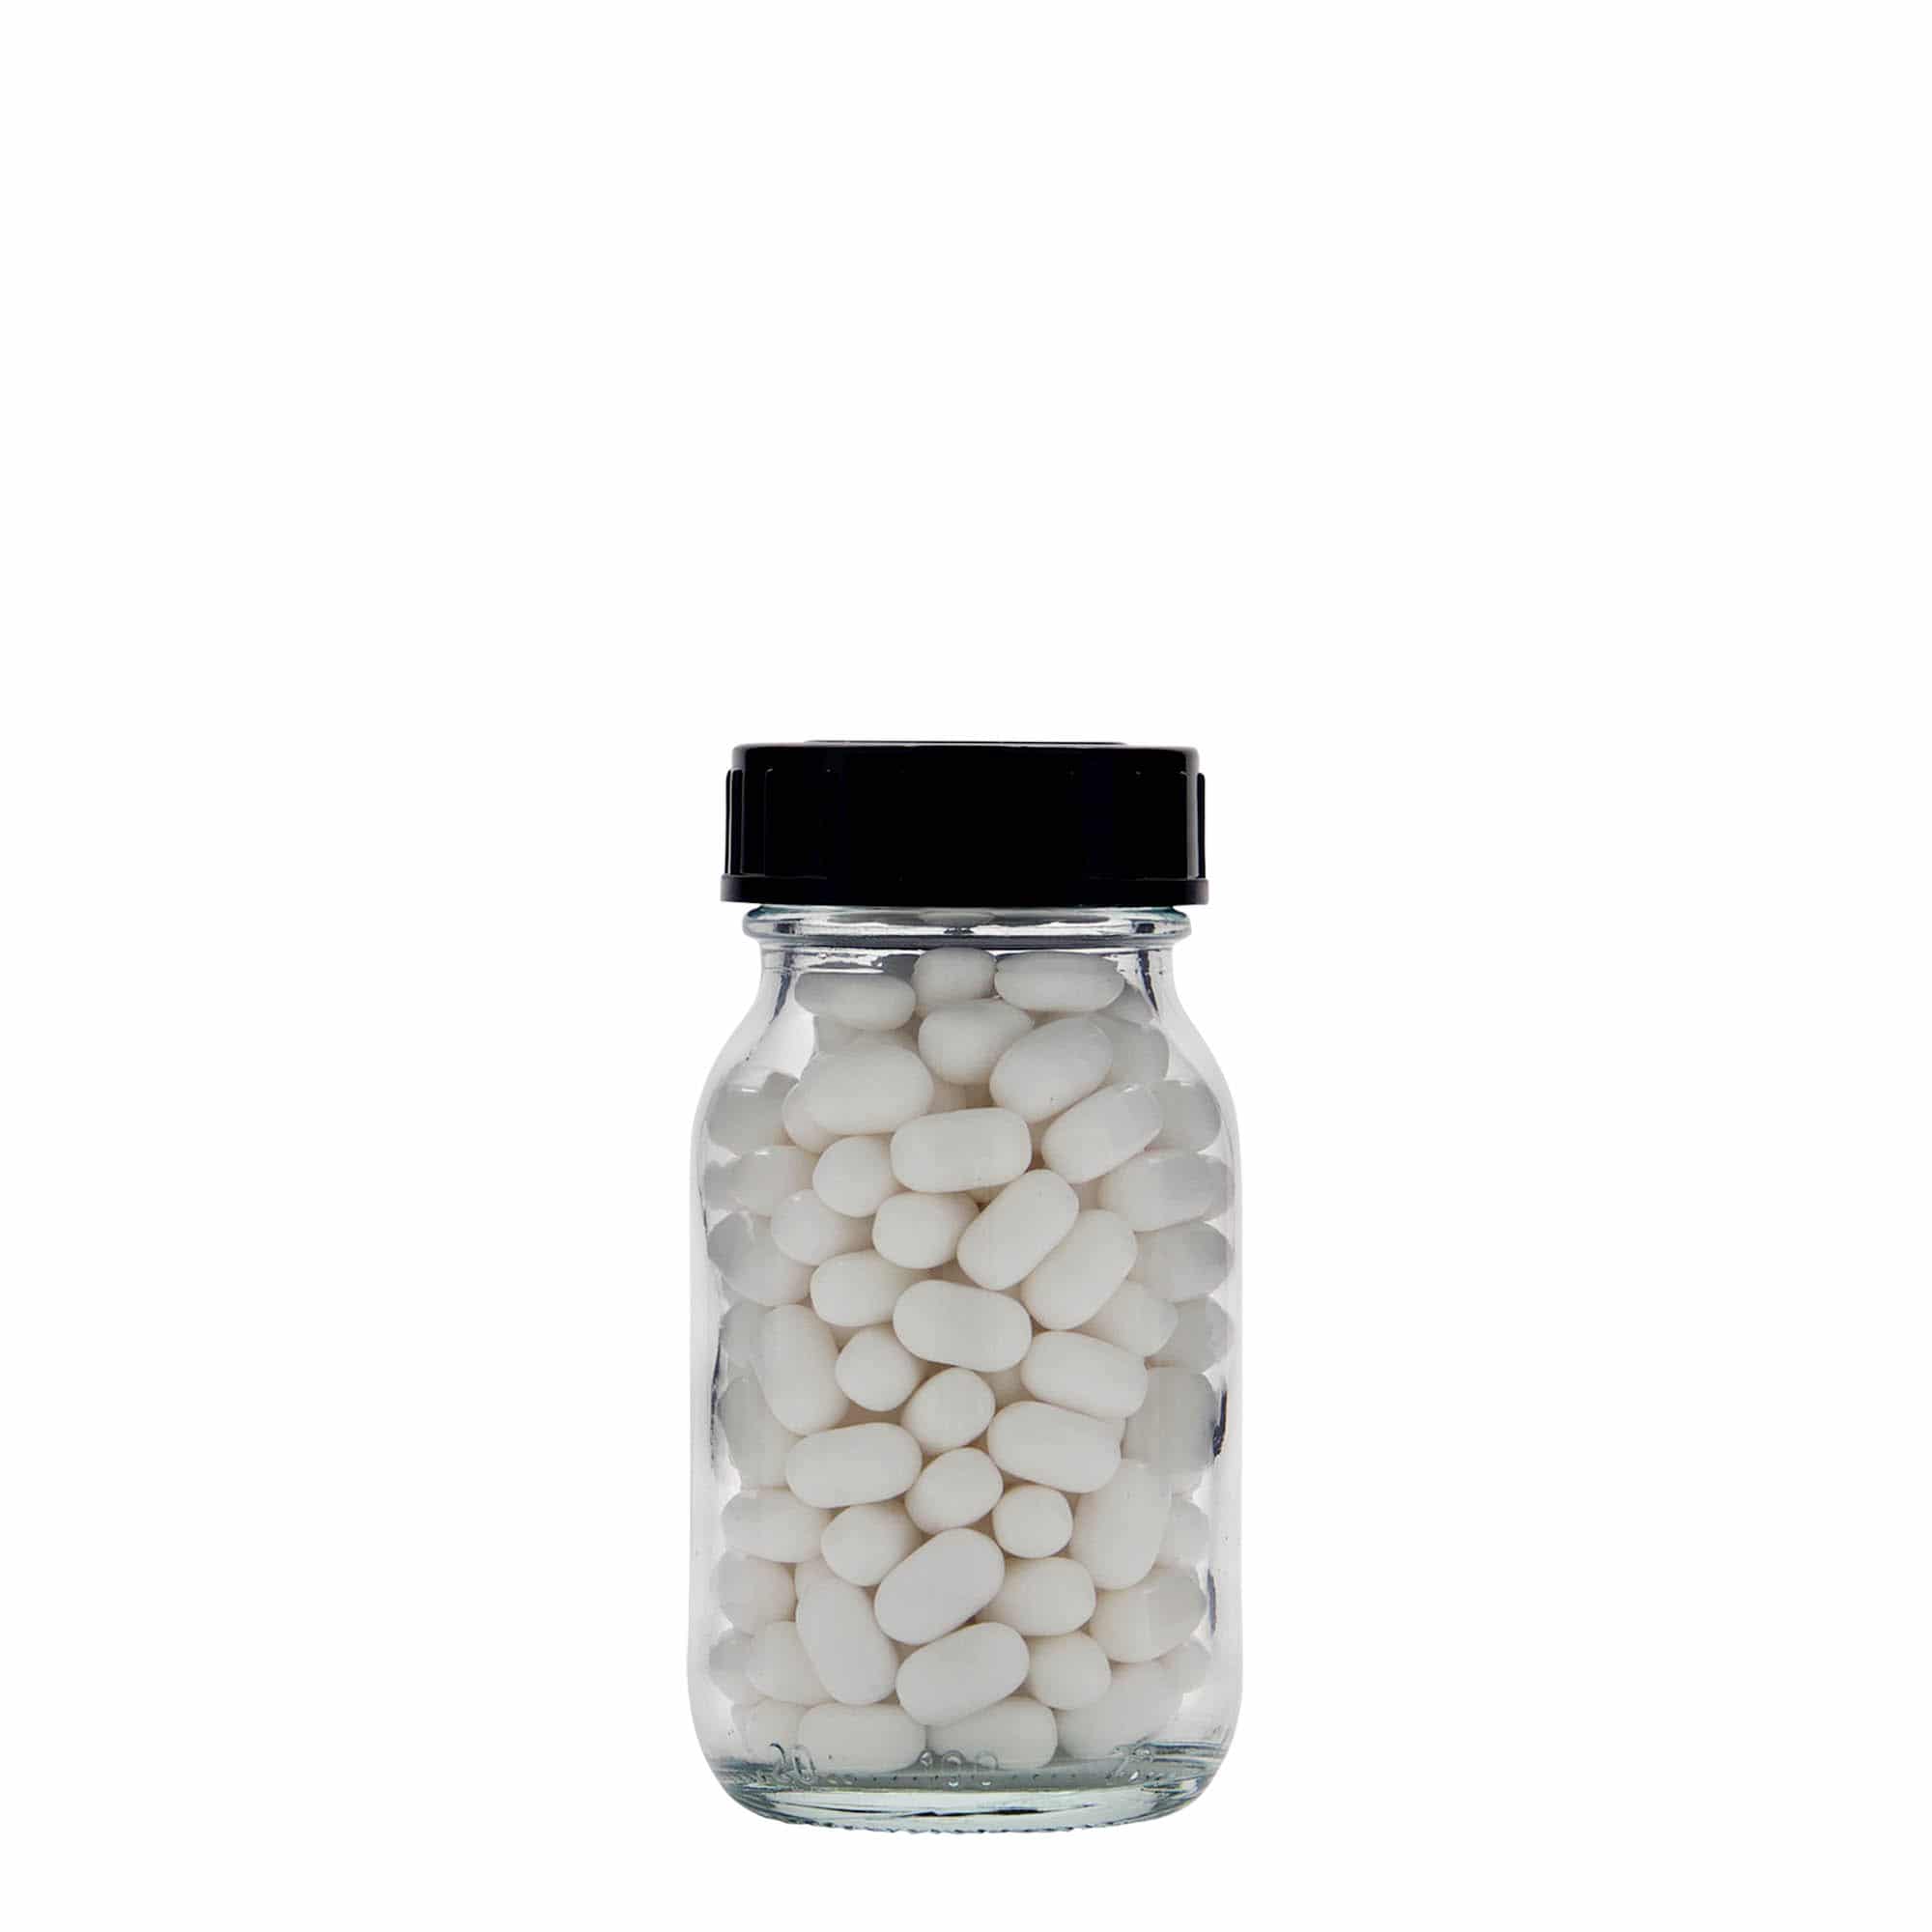 100 ml wide mouth jar, closure: DIN 40